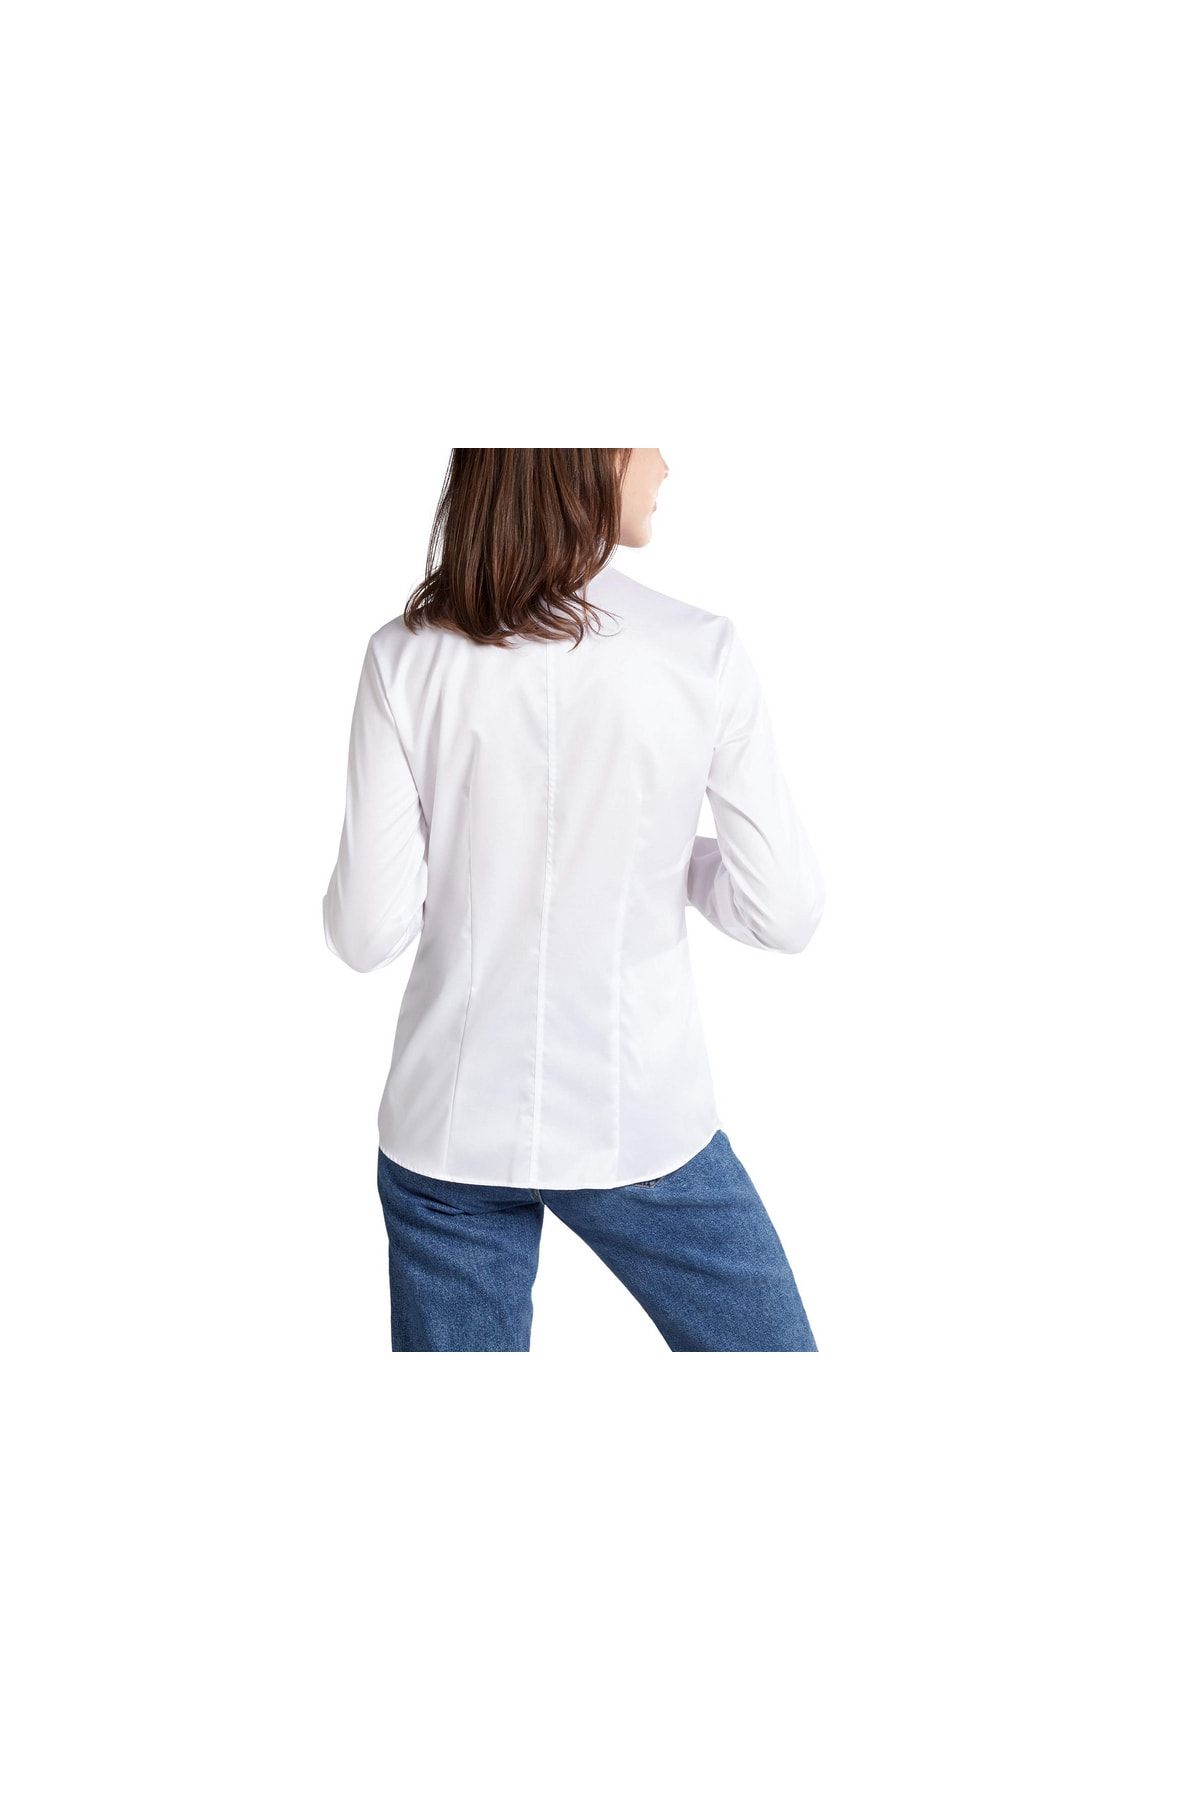 ETERNA Fit - - Trendyol Bluse - Weiß Regular